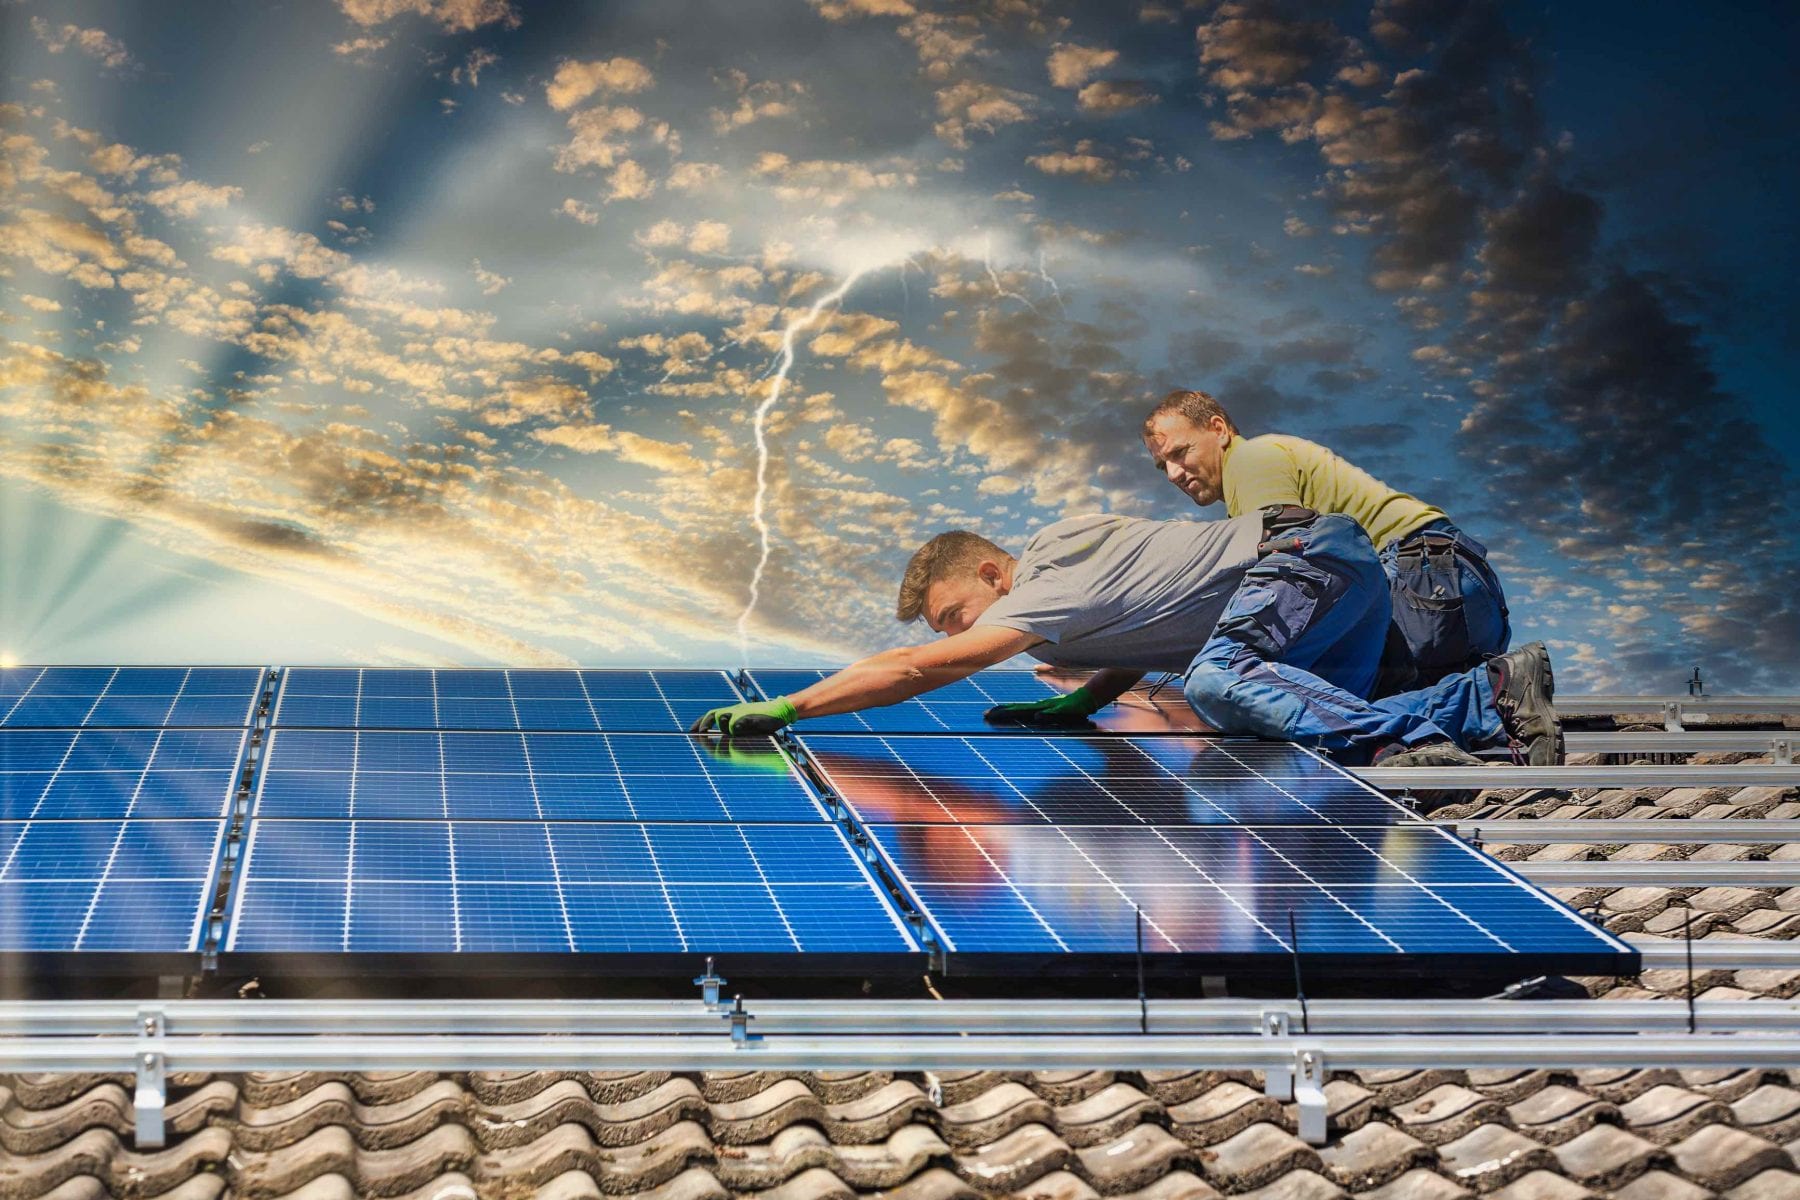 will-solar-panels-work-on-cloudy-days-gi-energy